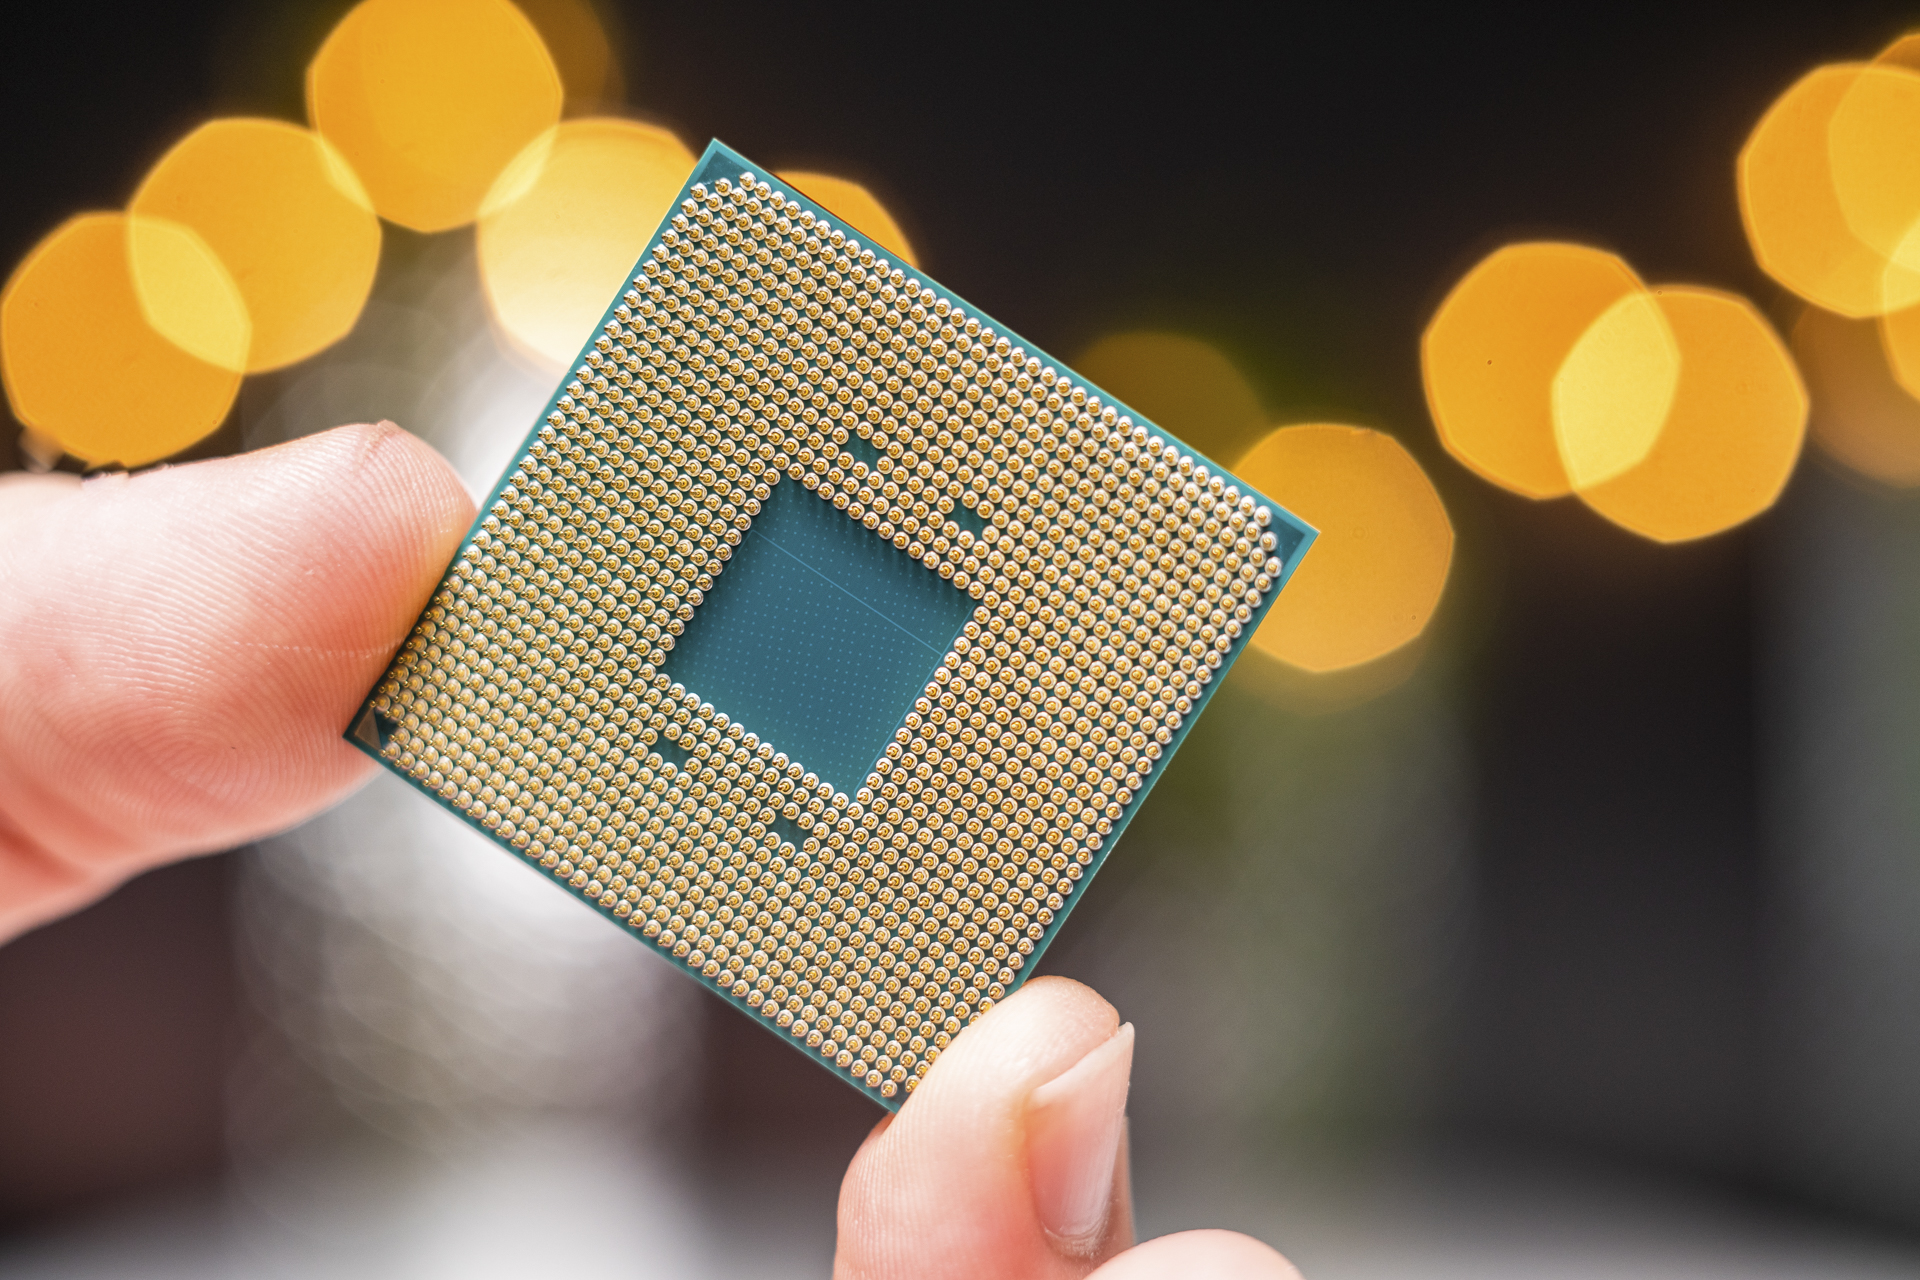 Intel Core i9-12900K vs. AMD Ryzen 9 5950X: Which High-End CPU Is Tops in  2021?